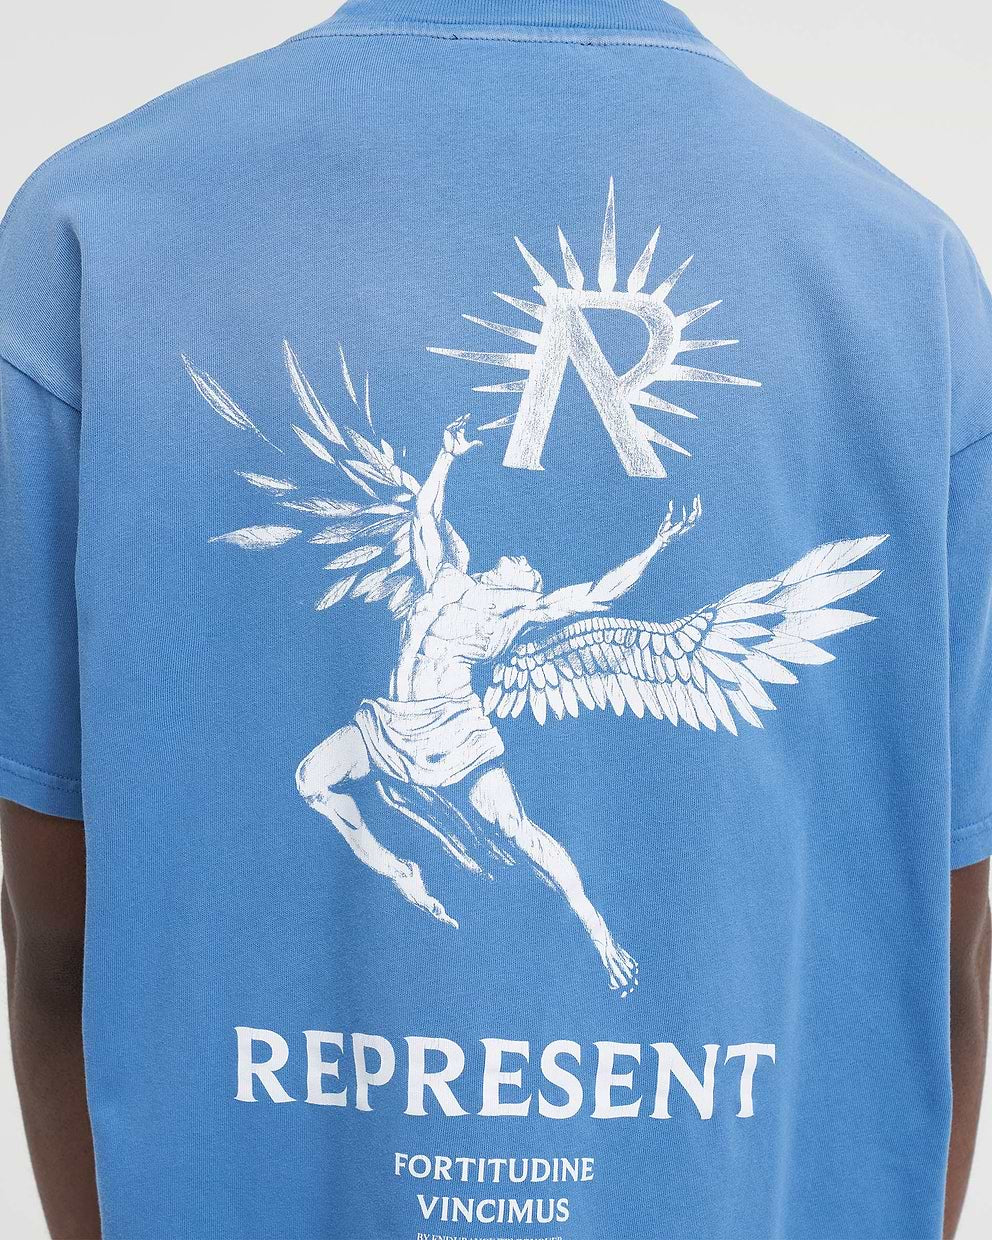 T-shirt Icarus Sky blue